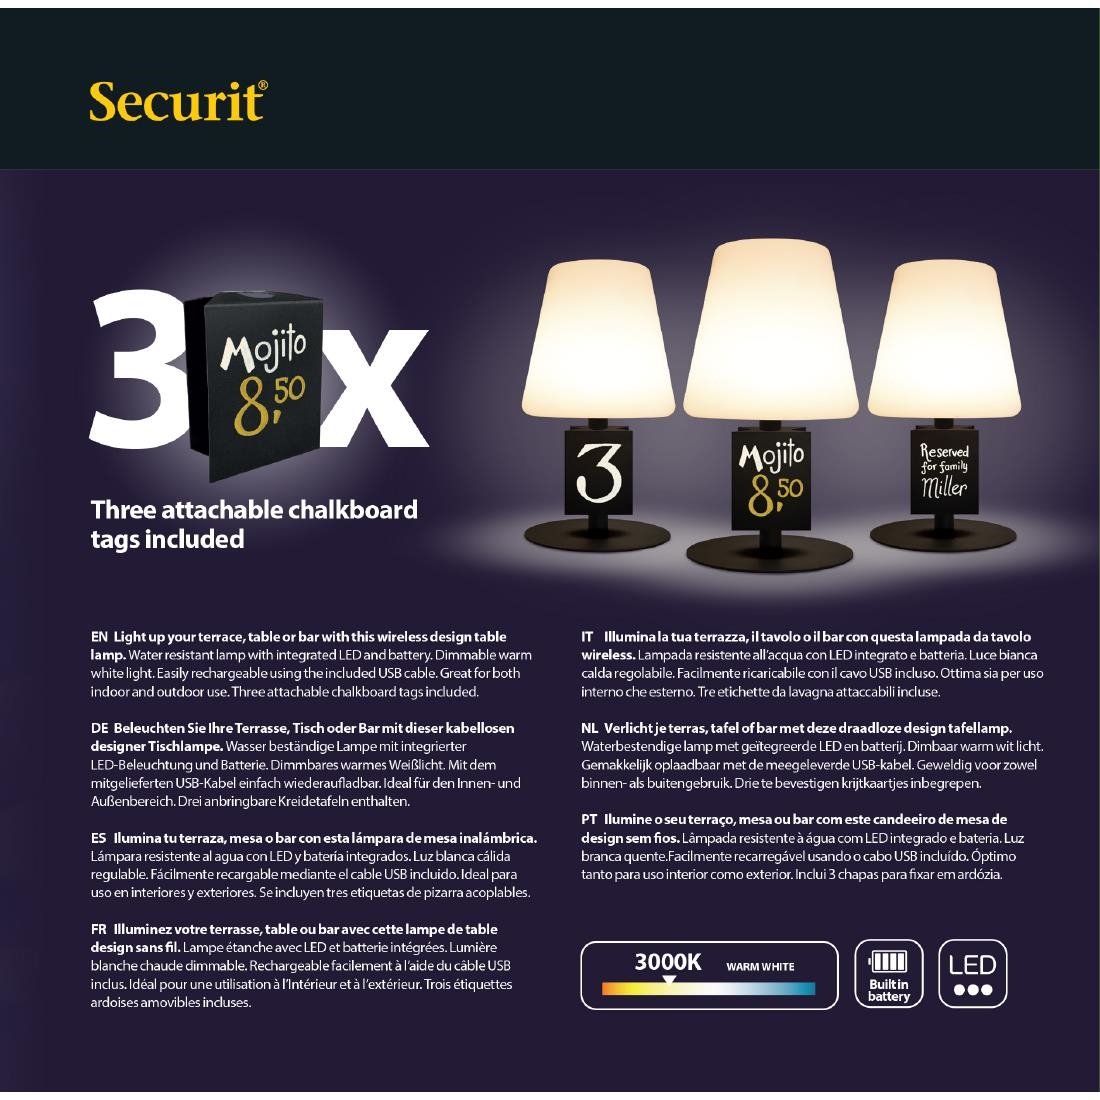 Securit Zwarte tafellamp Michelle incl 3 bevestigbare krijtbordlabels